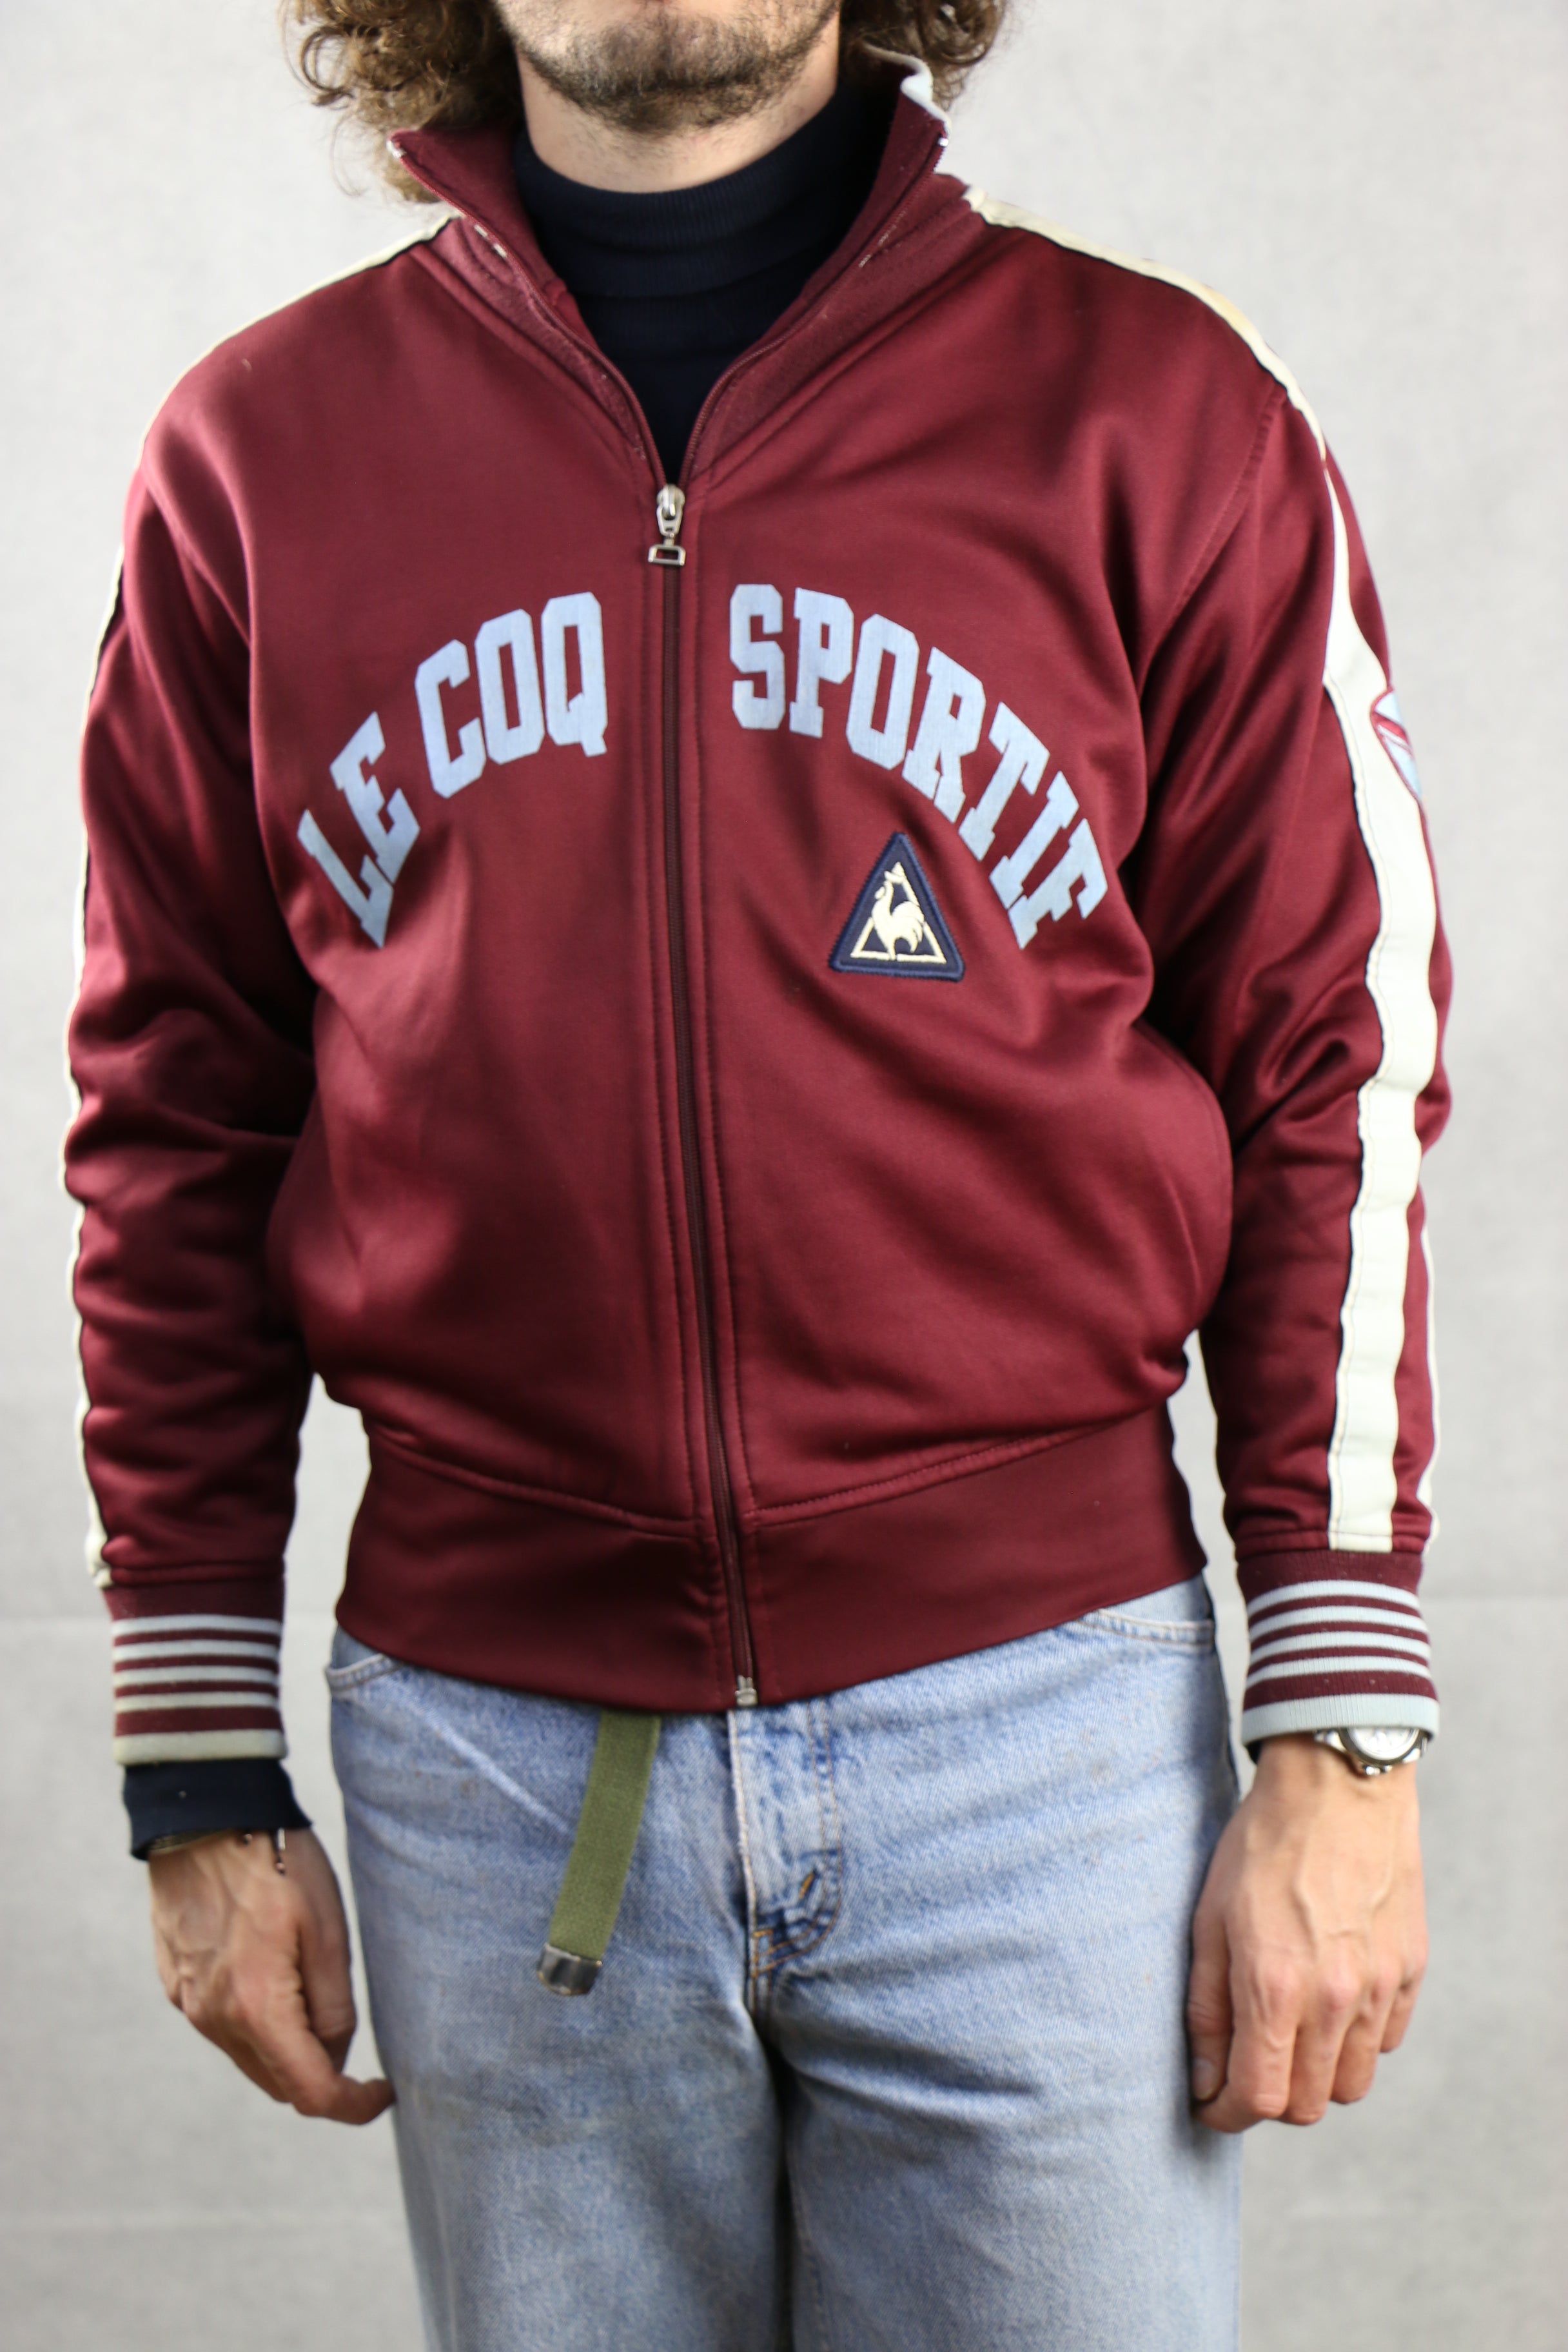 Le Coq Sportif Track Jacket ~ Vintage Store Clochard92.com